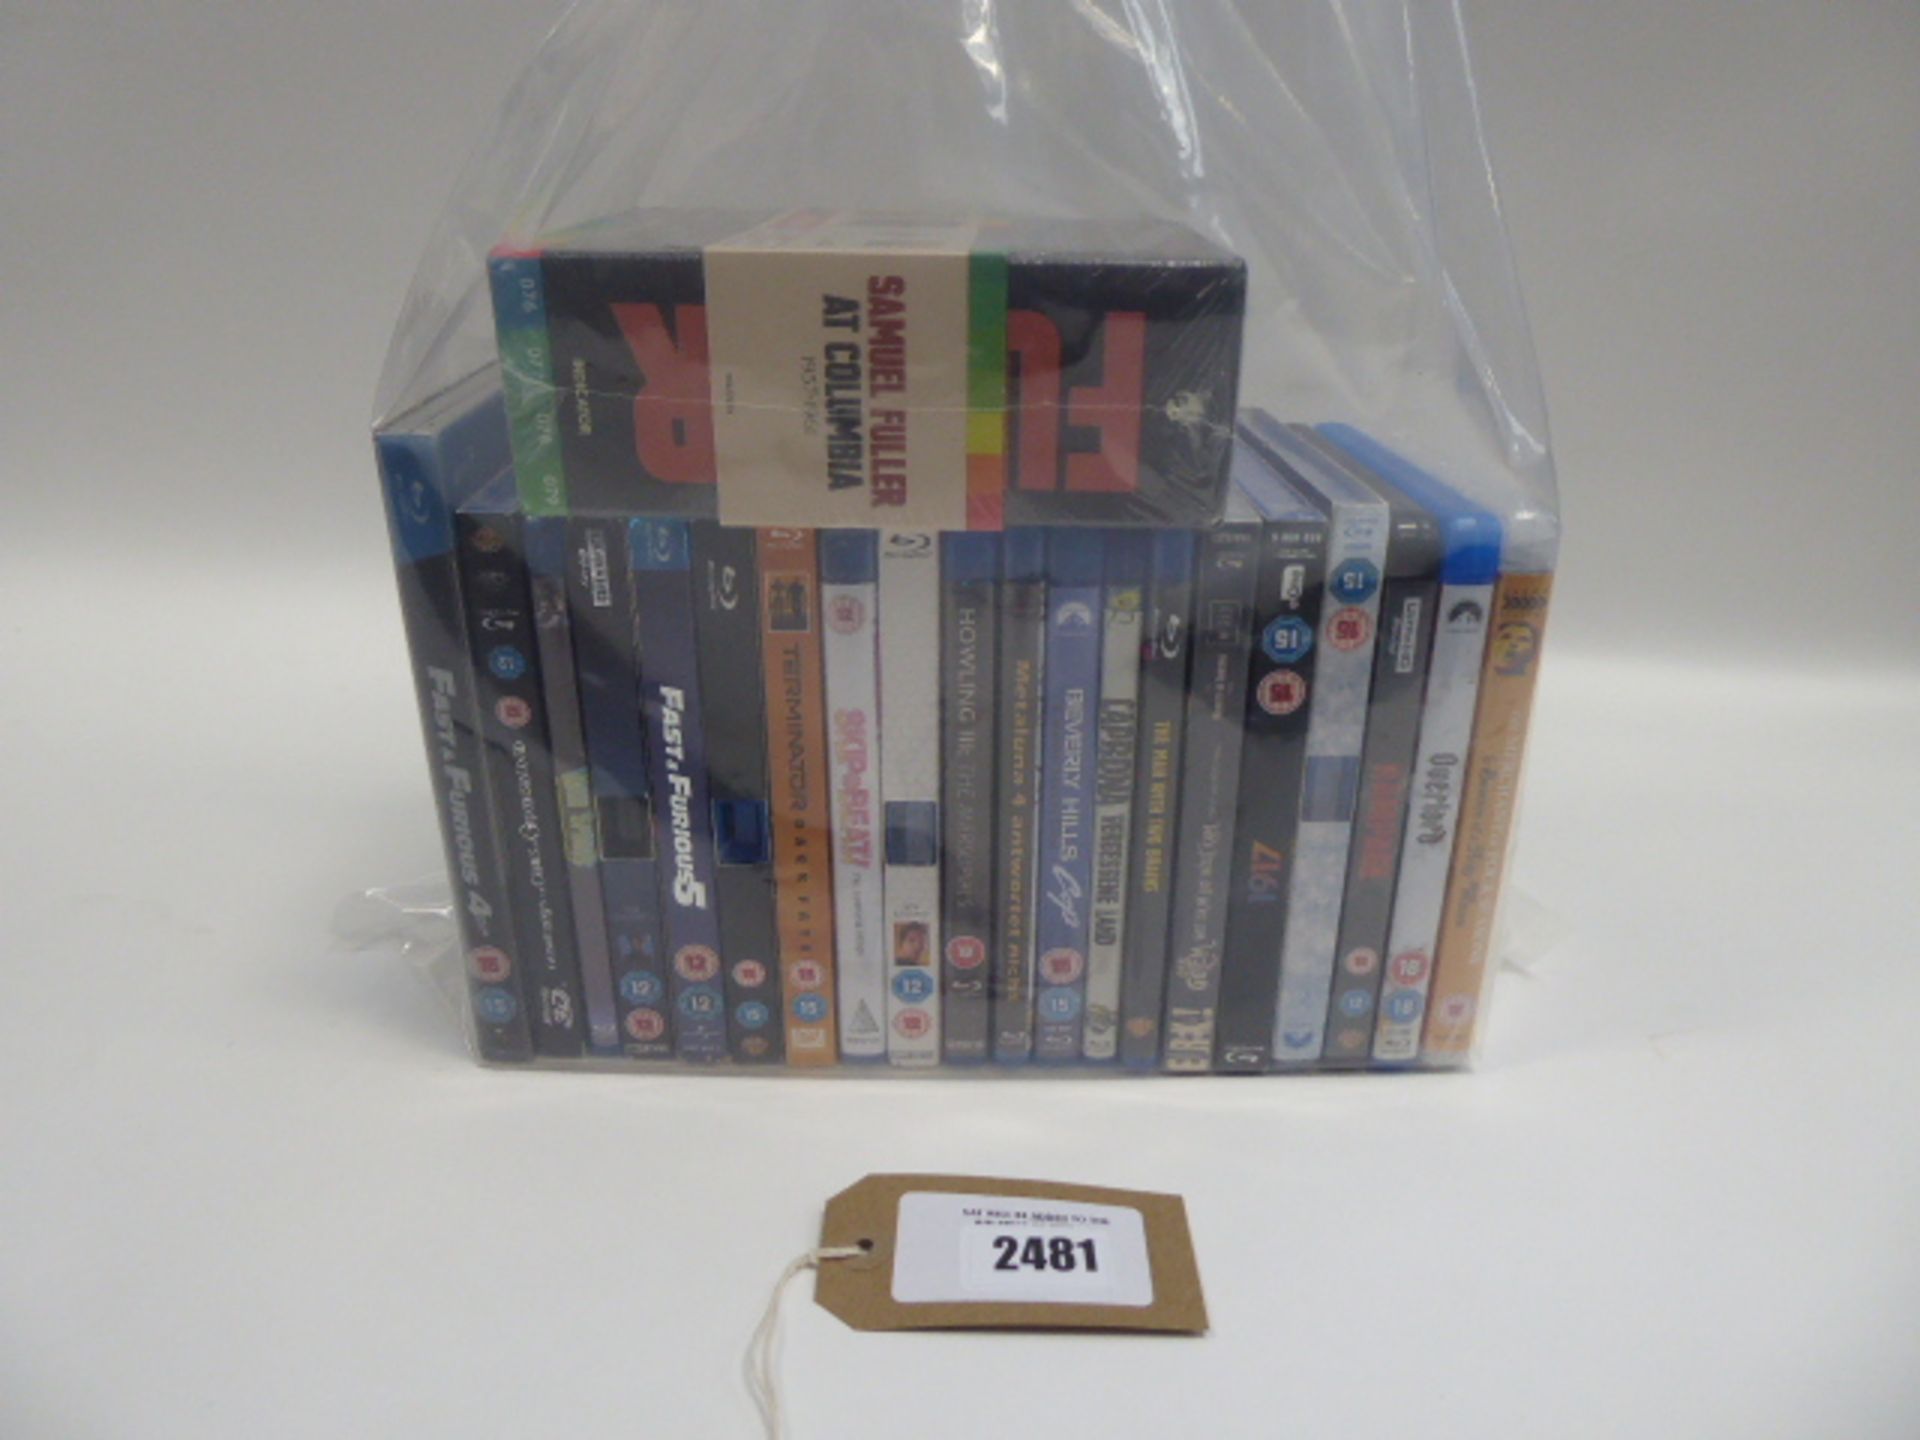 Bag containing quantity of various Blu-Ray films/boxsets